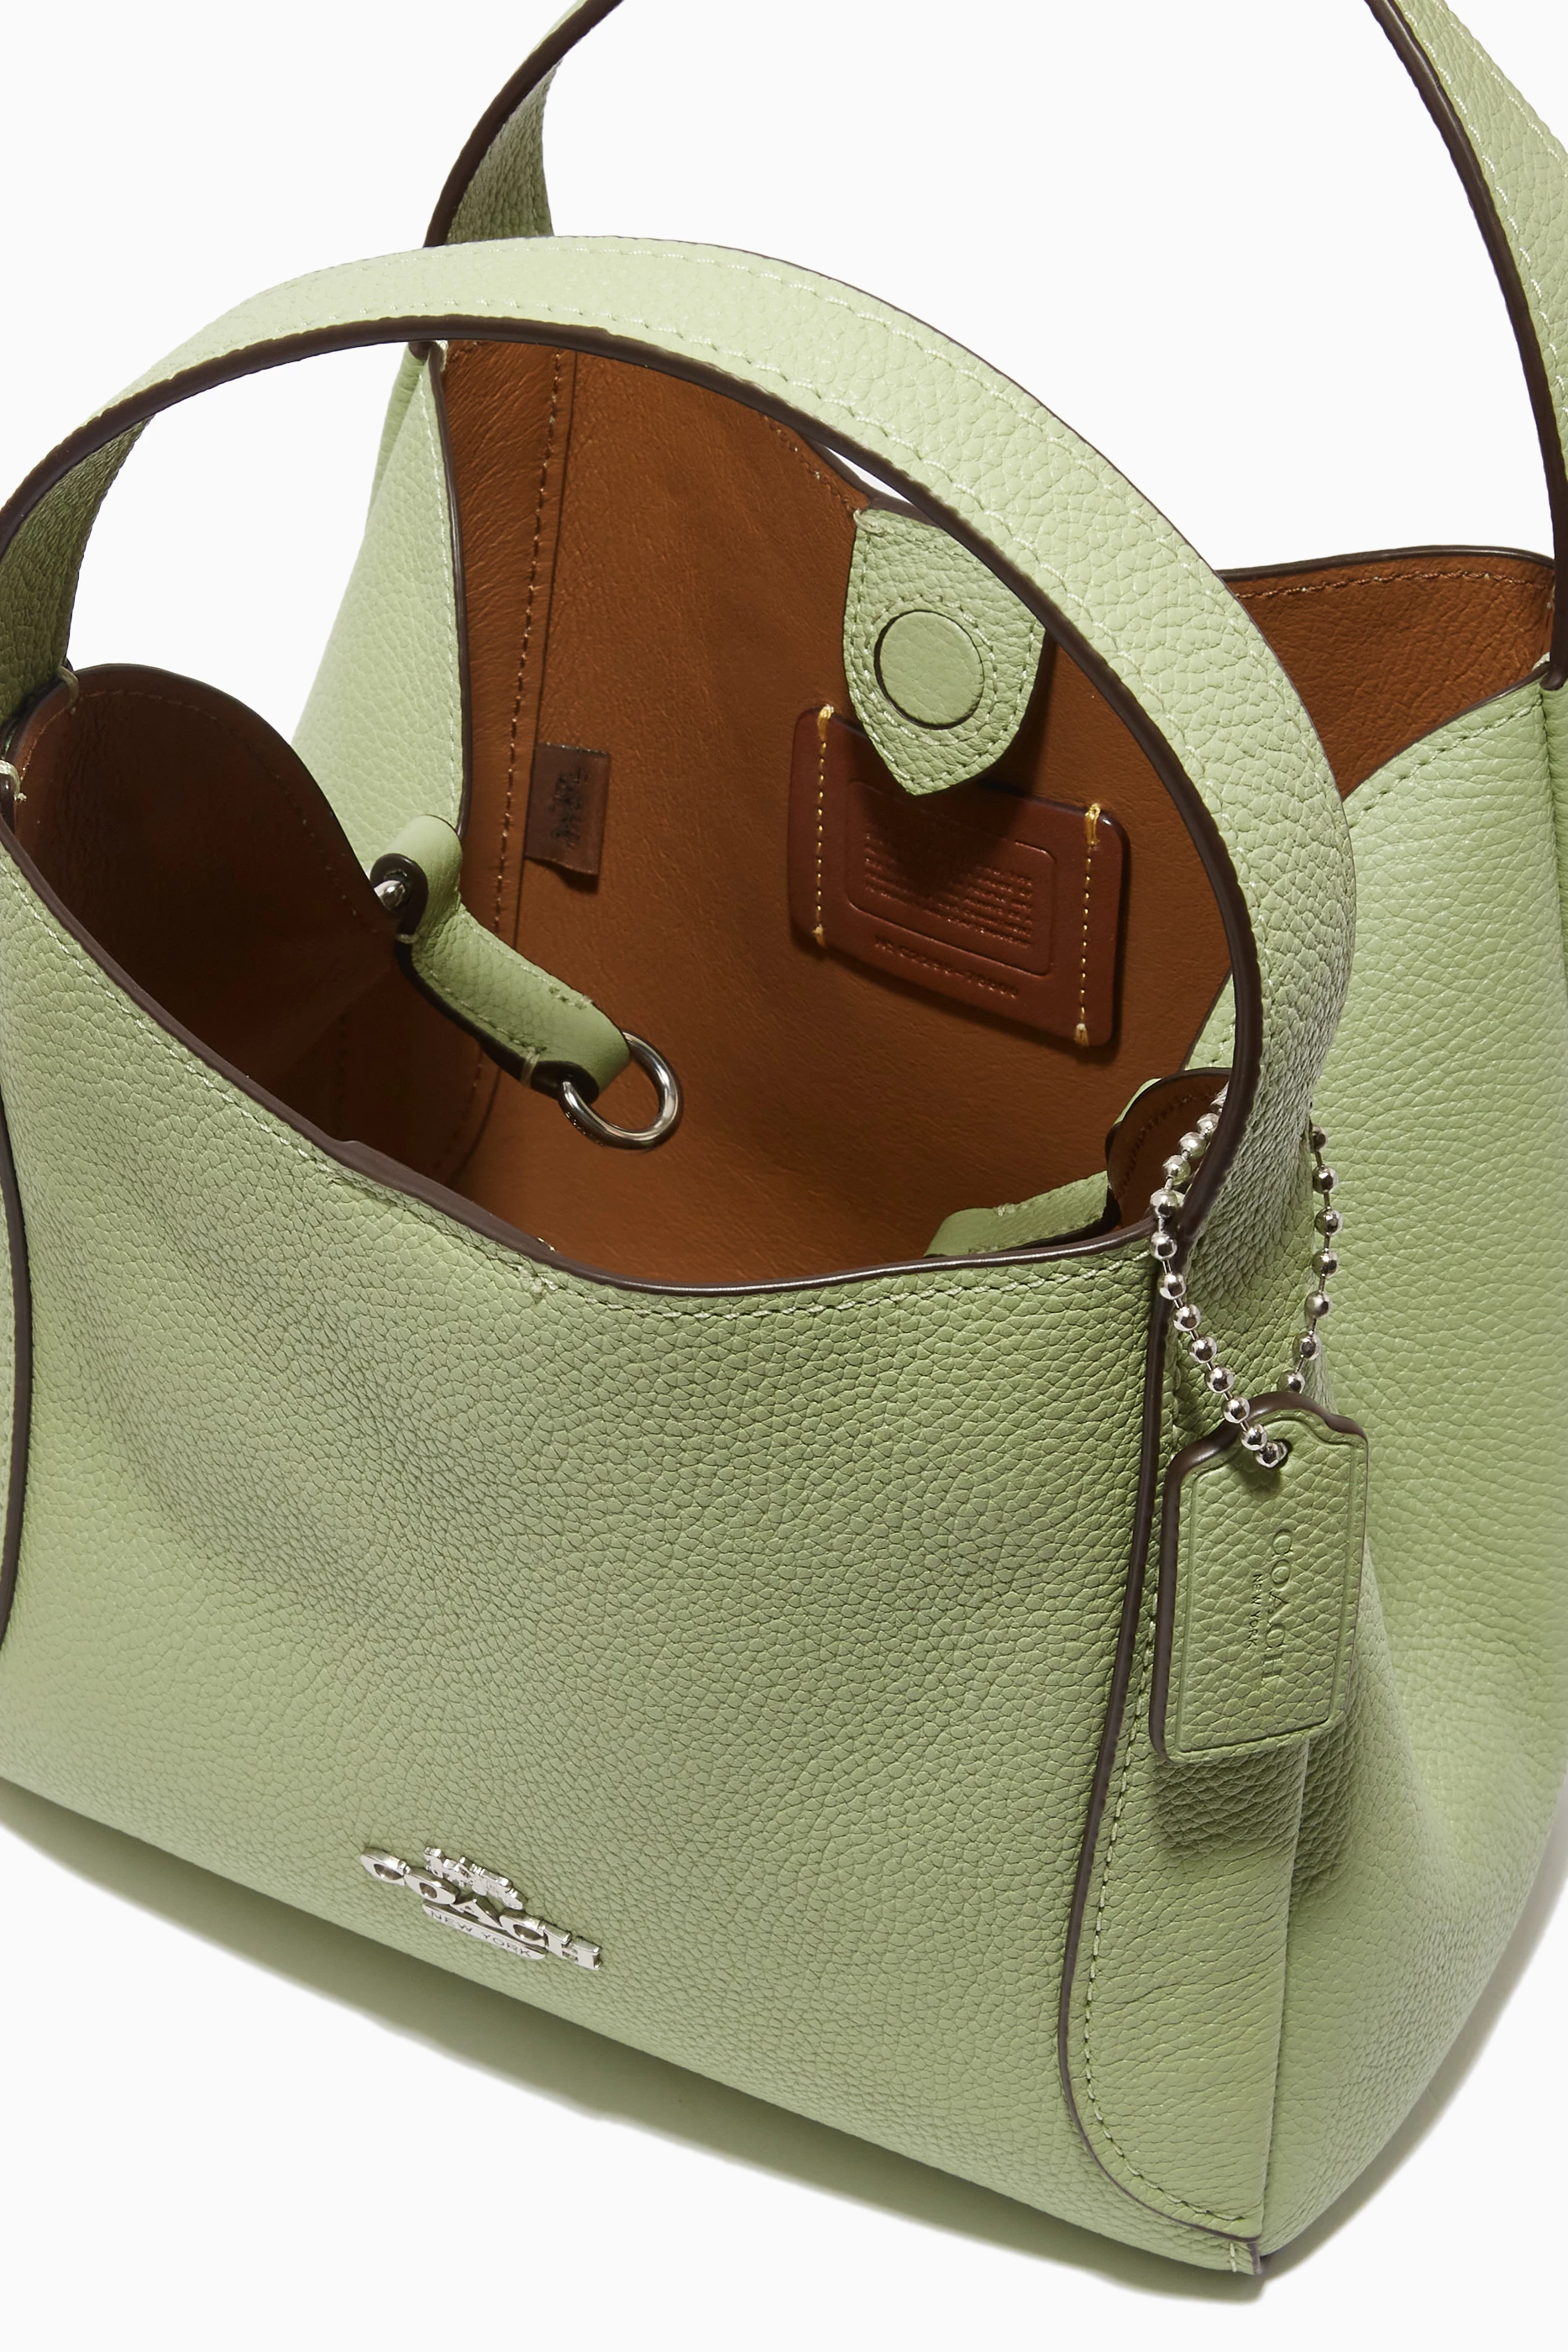 Coach Ladies Hadley Hobo 21 Bag-Pink 78800 V5PTP - Handbags - Jomashop